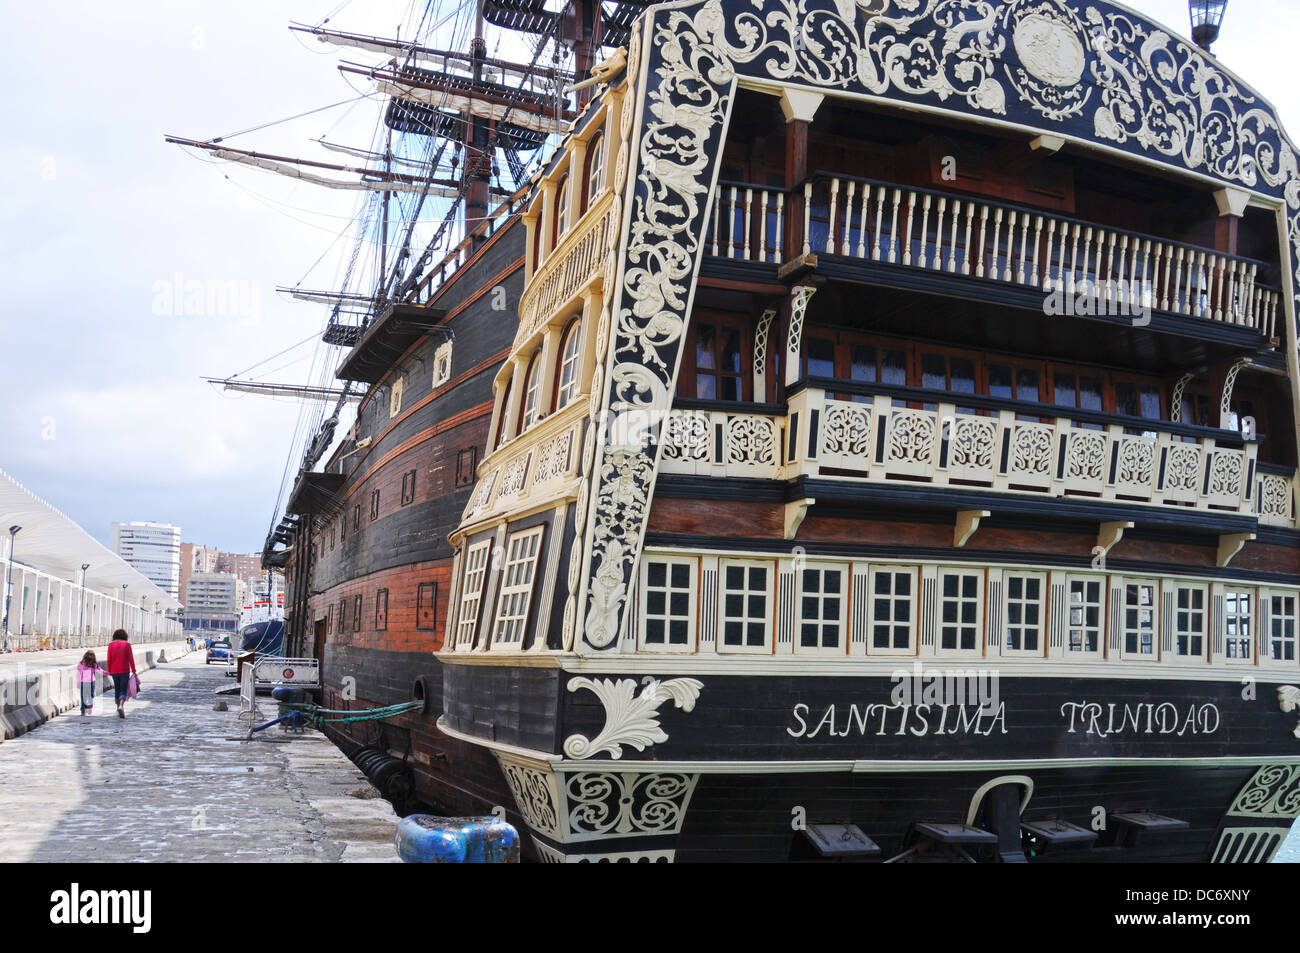 Replica of the square rigged sailing ship Santisima Trinidad alongside the quayside in Malaga, Spain Stock Photo